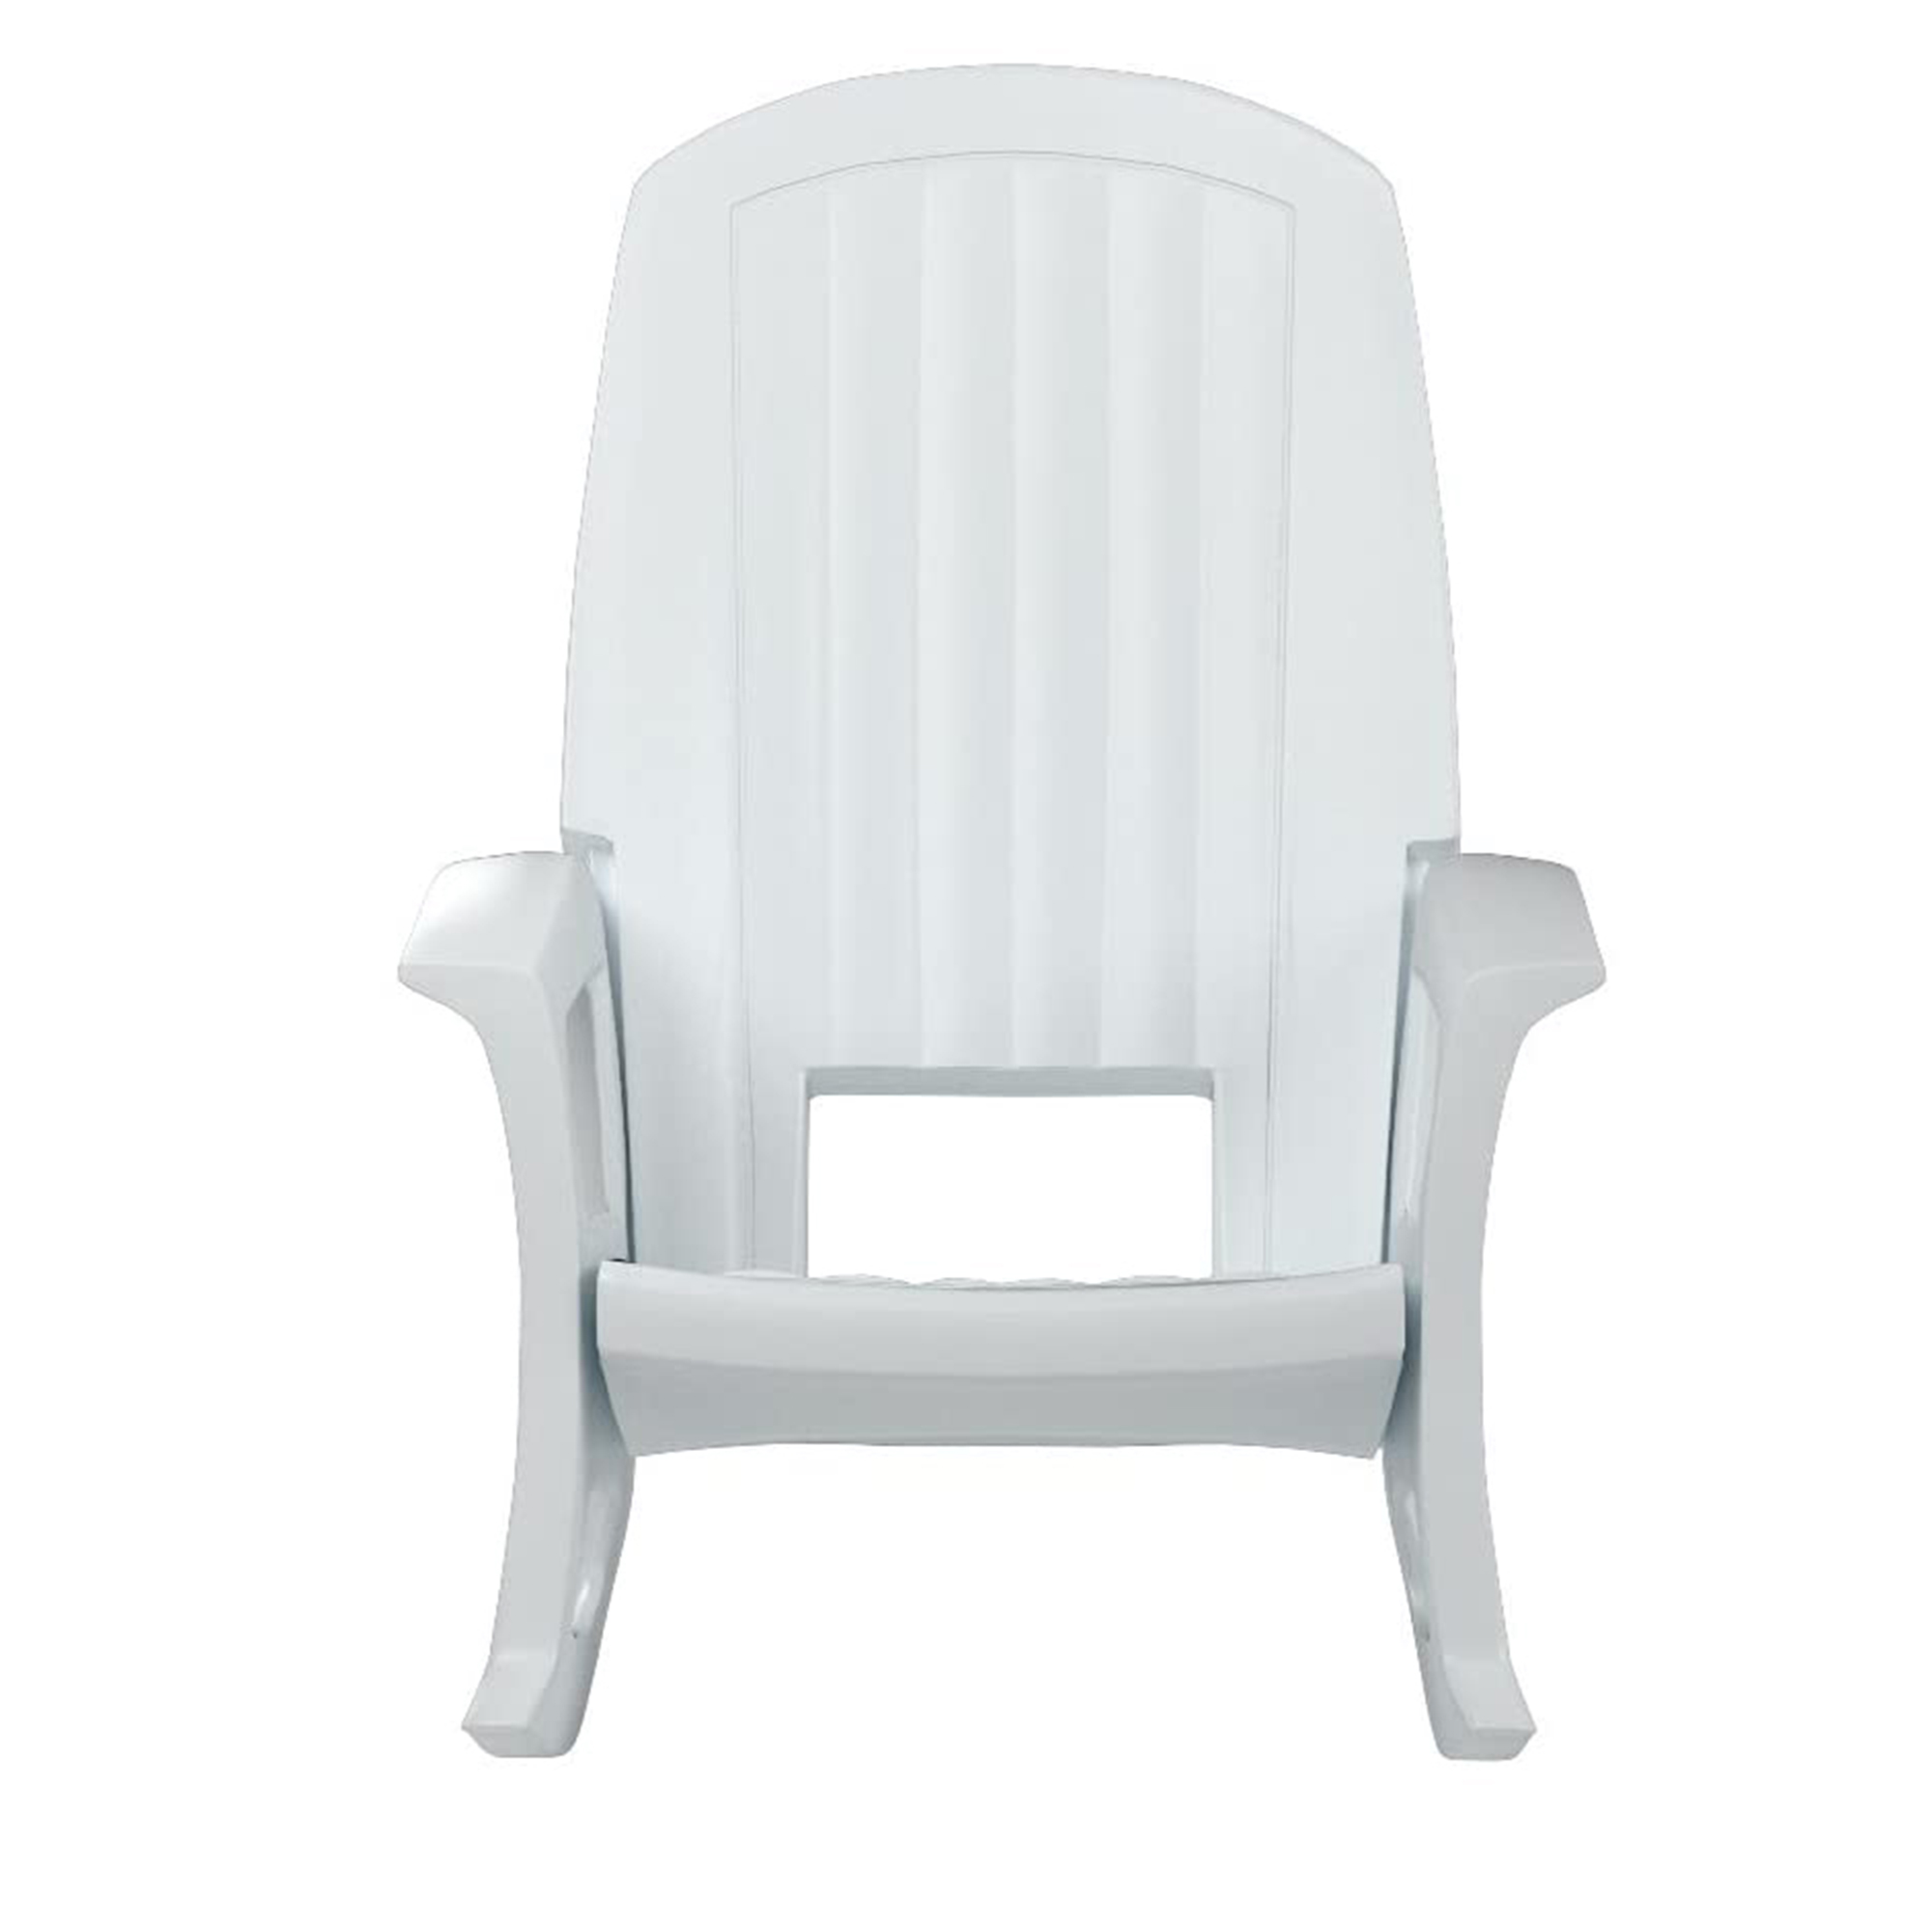 Semco Rockaway Plastic Rocking Chair - image 1 of 11